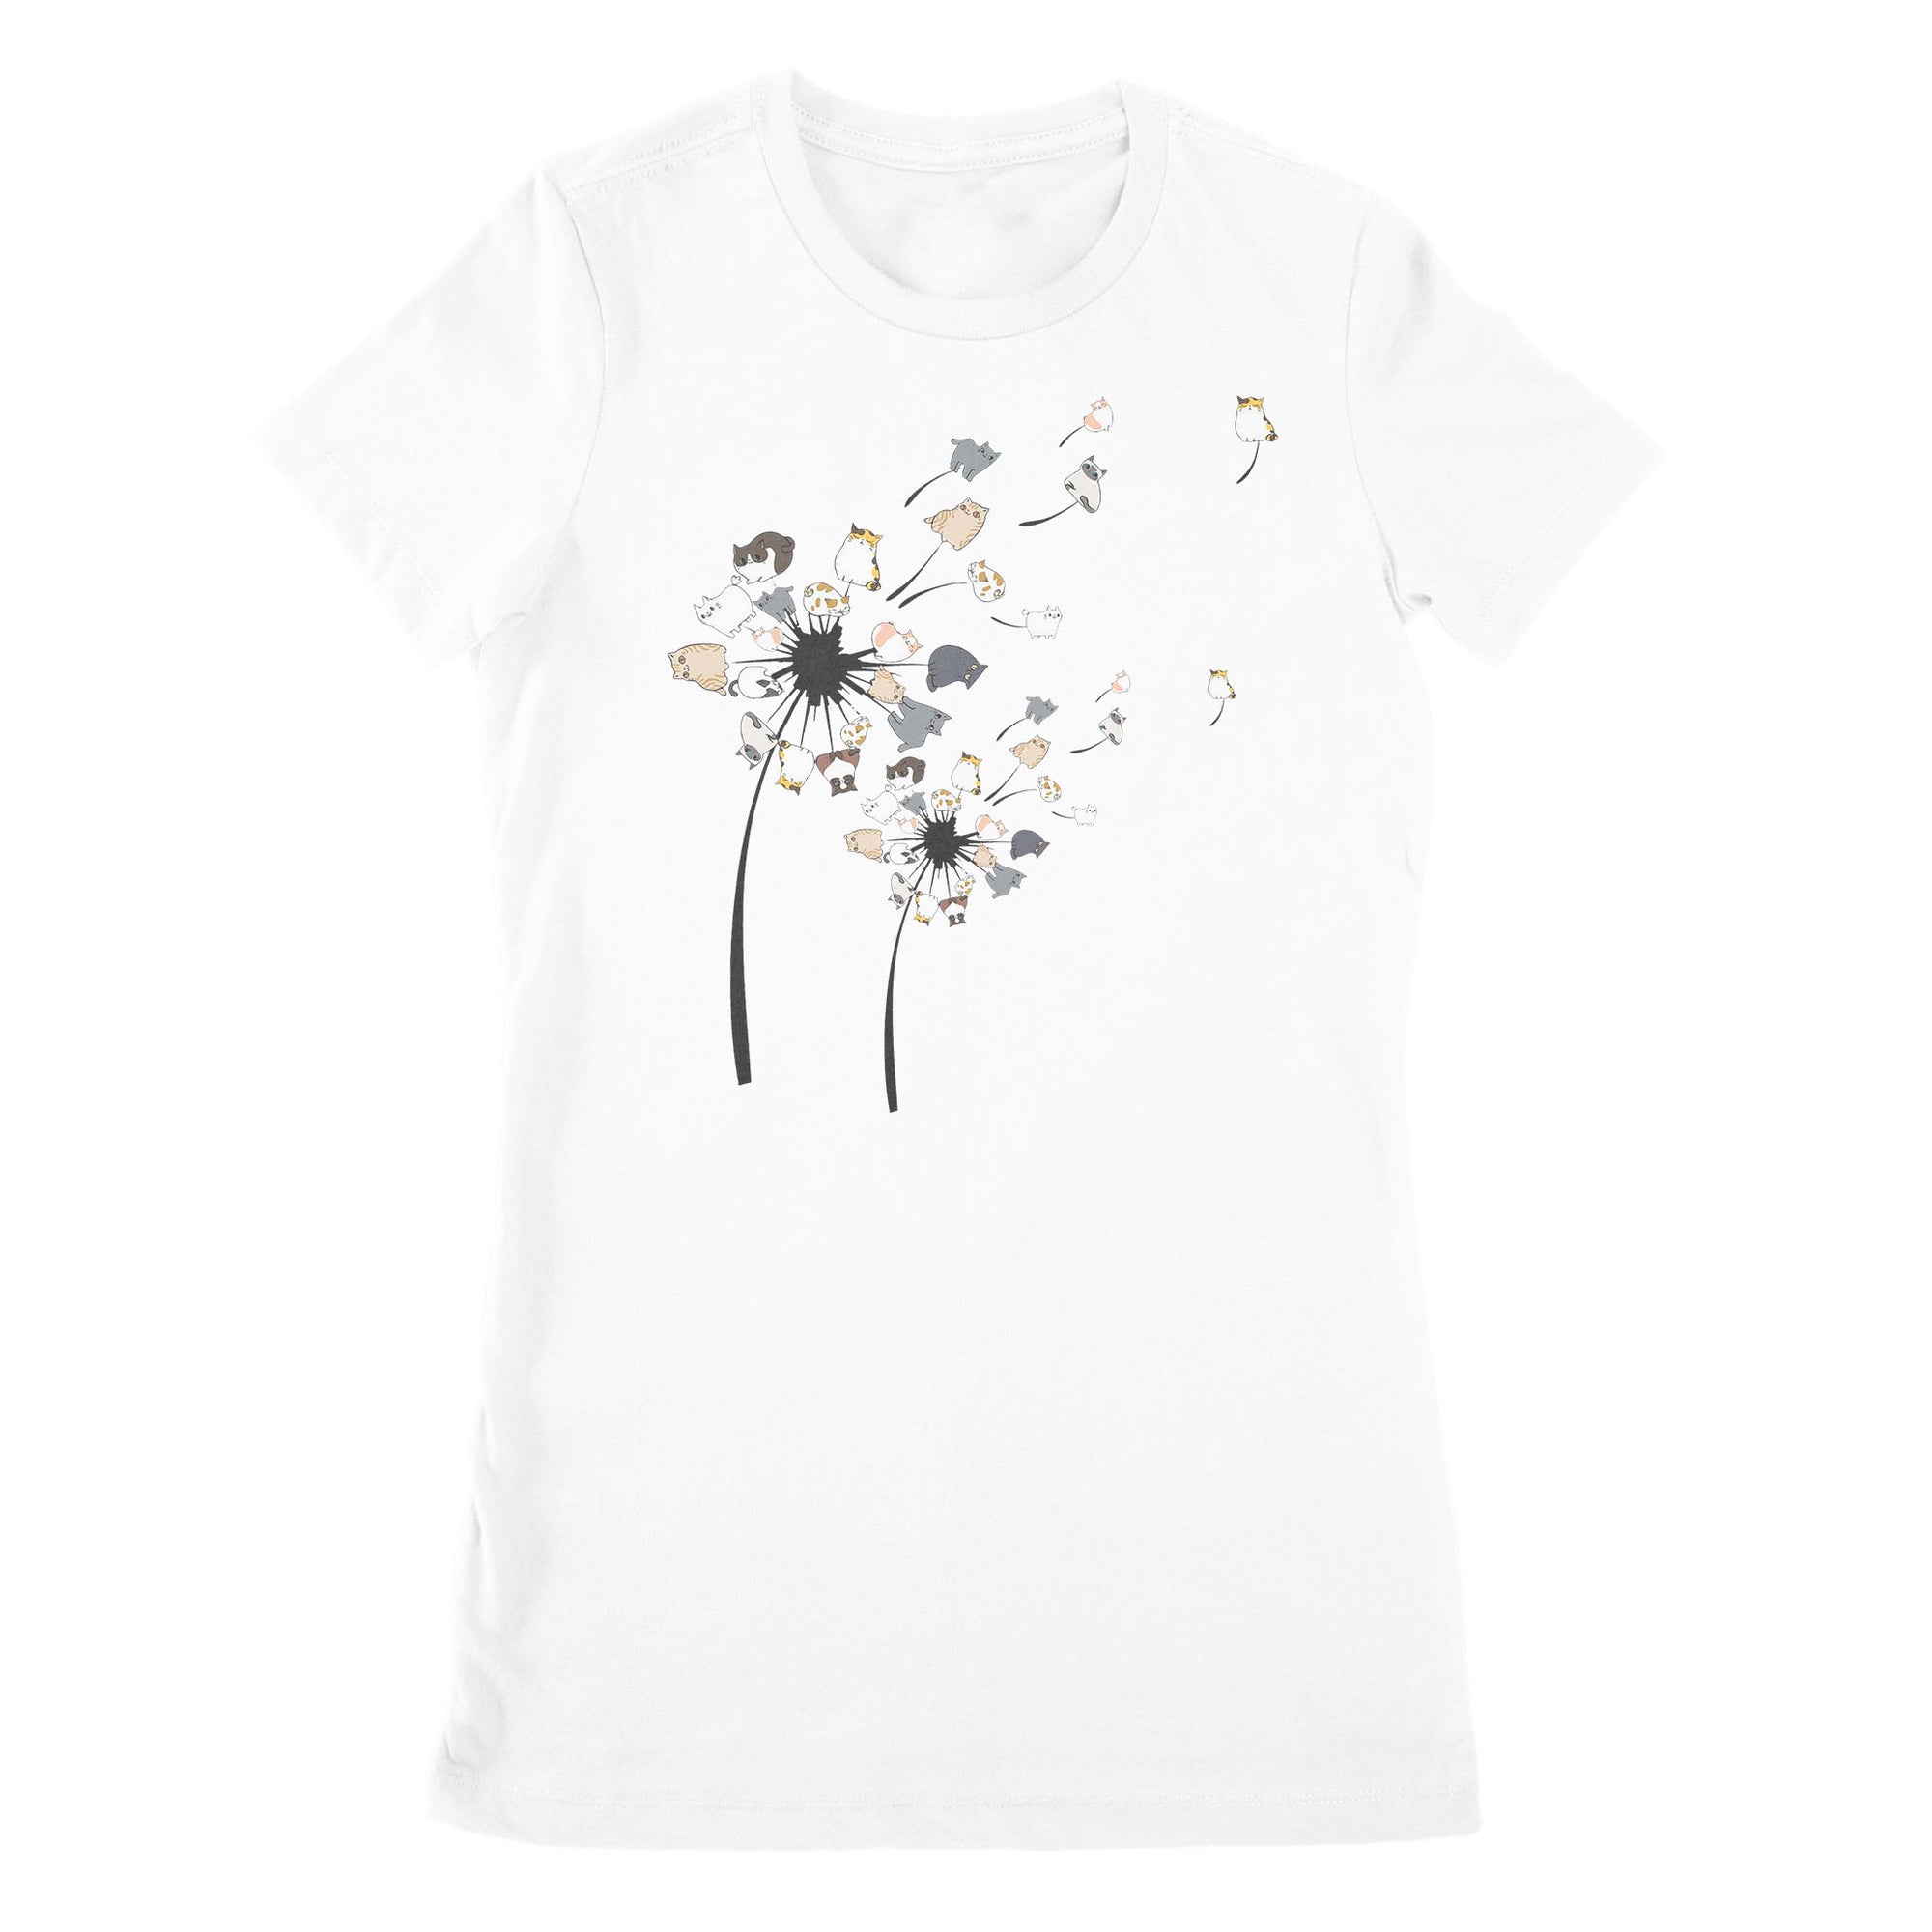 Premium Women's T-shirt - Dandelion Cats Flower